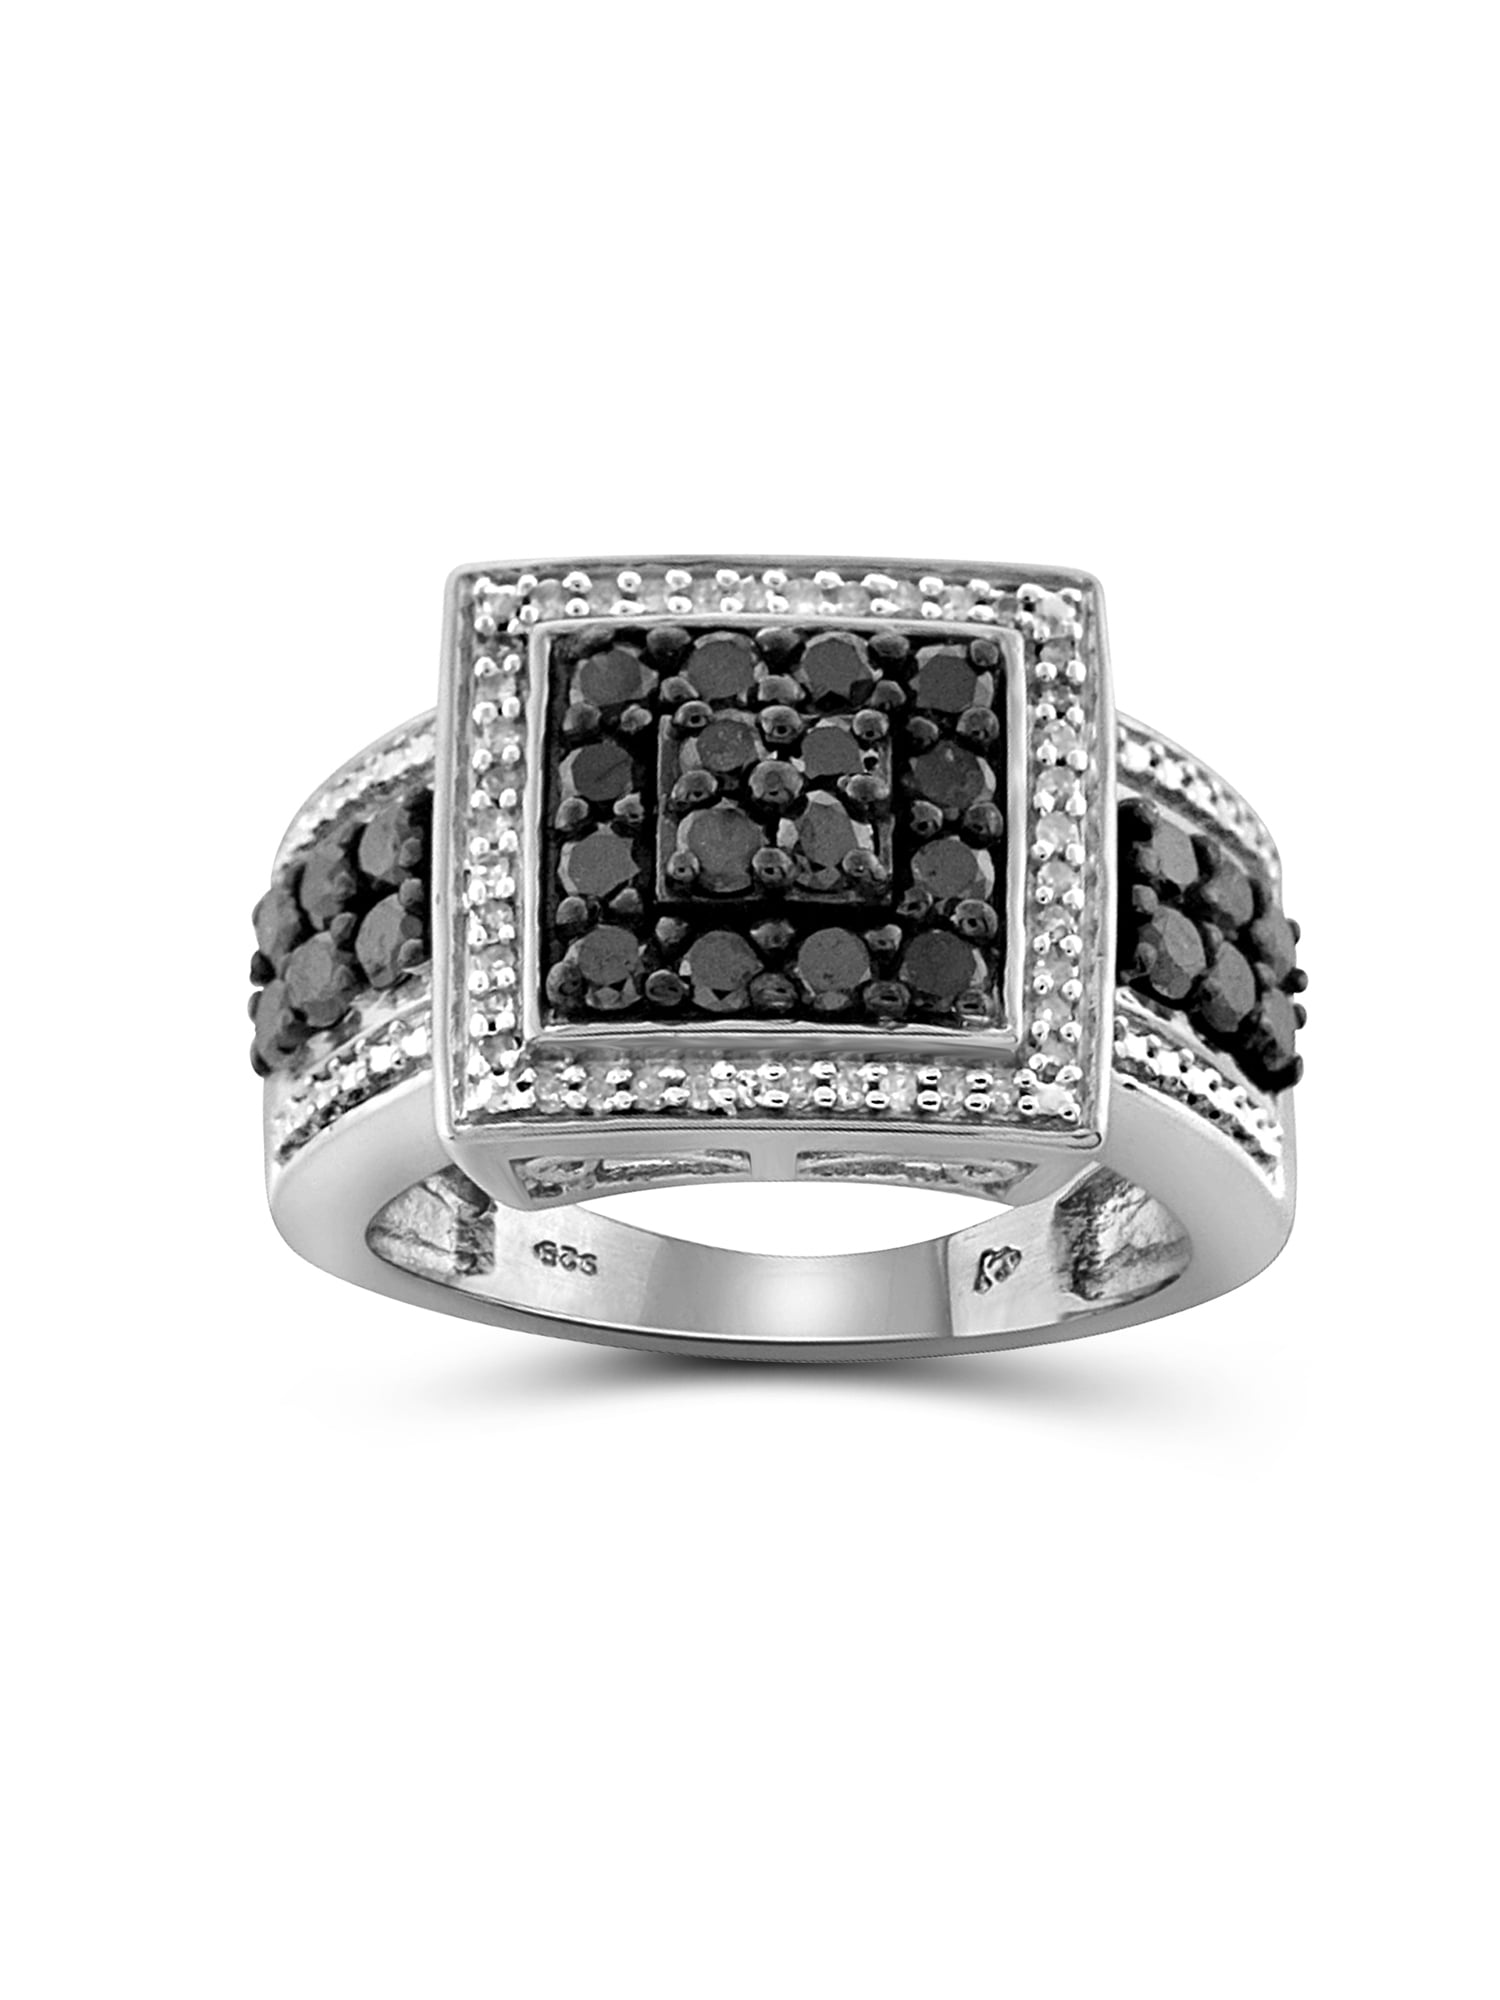 1.3 Carat t.w Platinum Victorian Halo Style Square Shaped Pave Set Round Diamond  Engagement Ring w/a 1 Carat Princess Cut Black Diamond Heirloom Quality |  Amazon.com